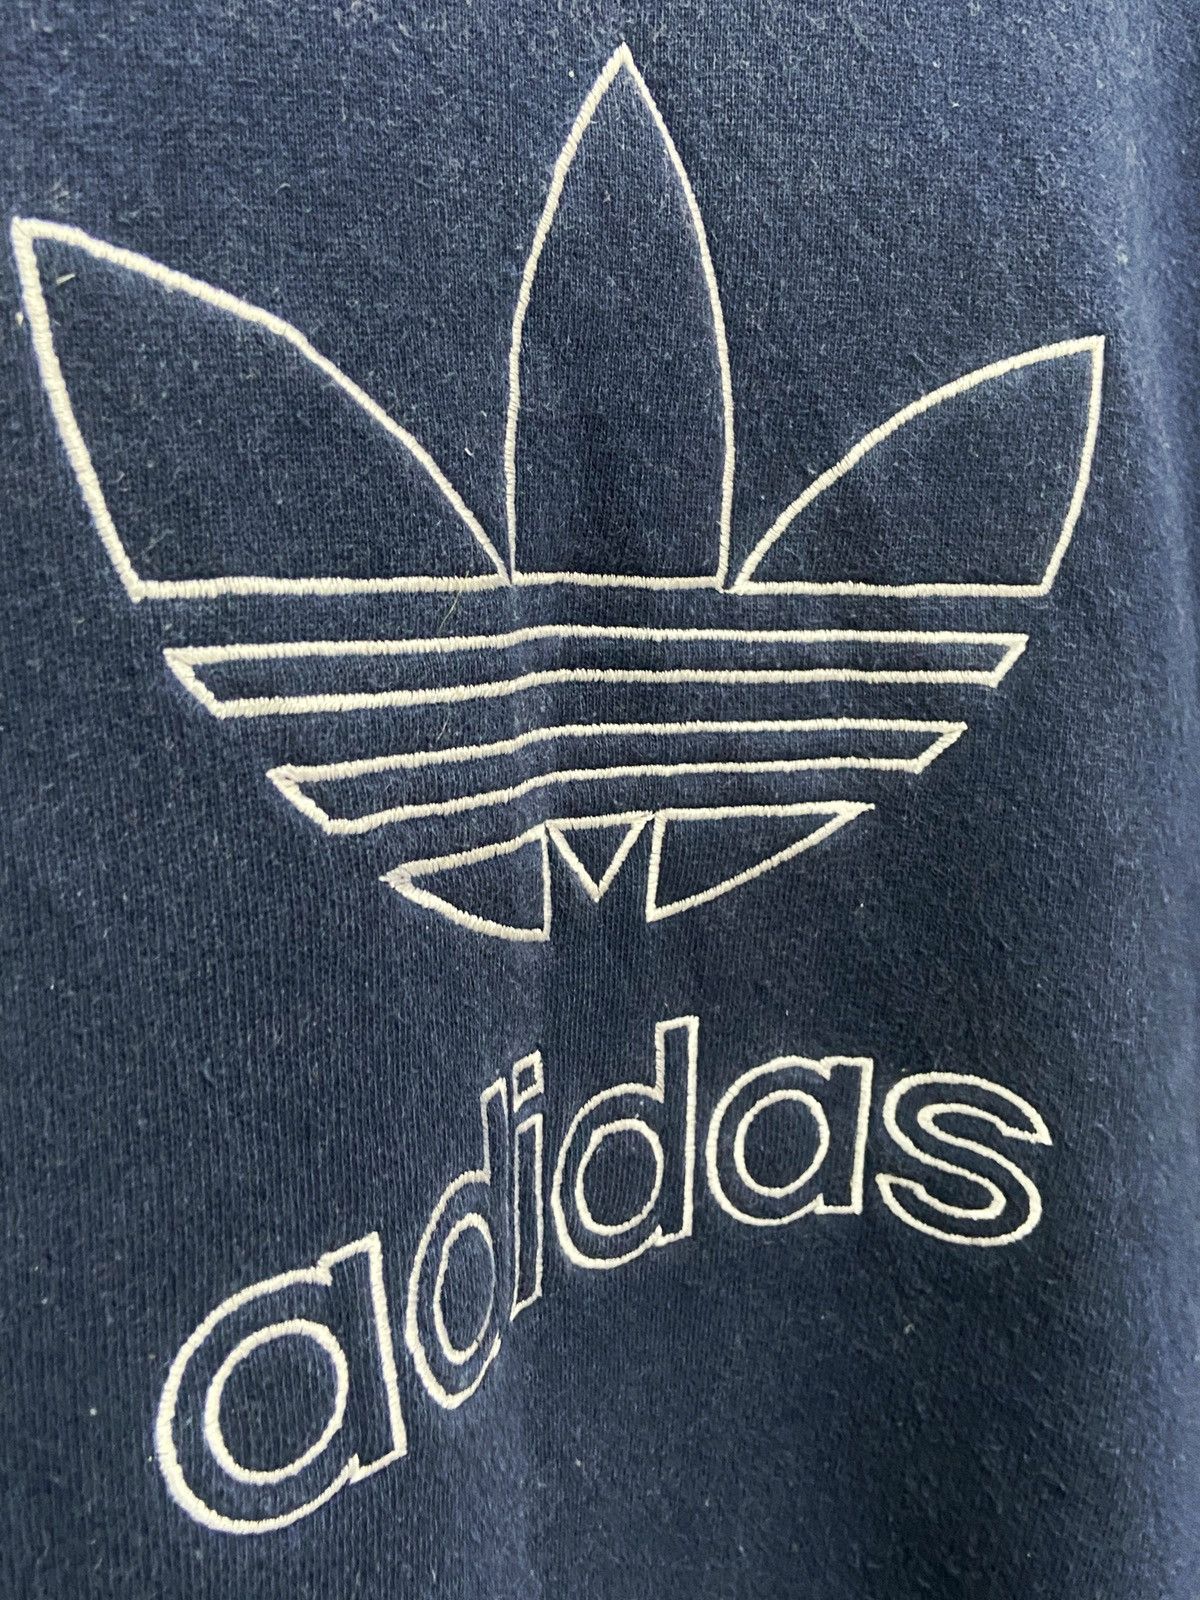 Vintage 90s Adidas Trefoil Big Logo Sweatshirt - 4